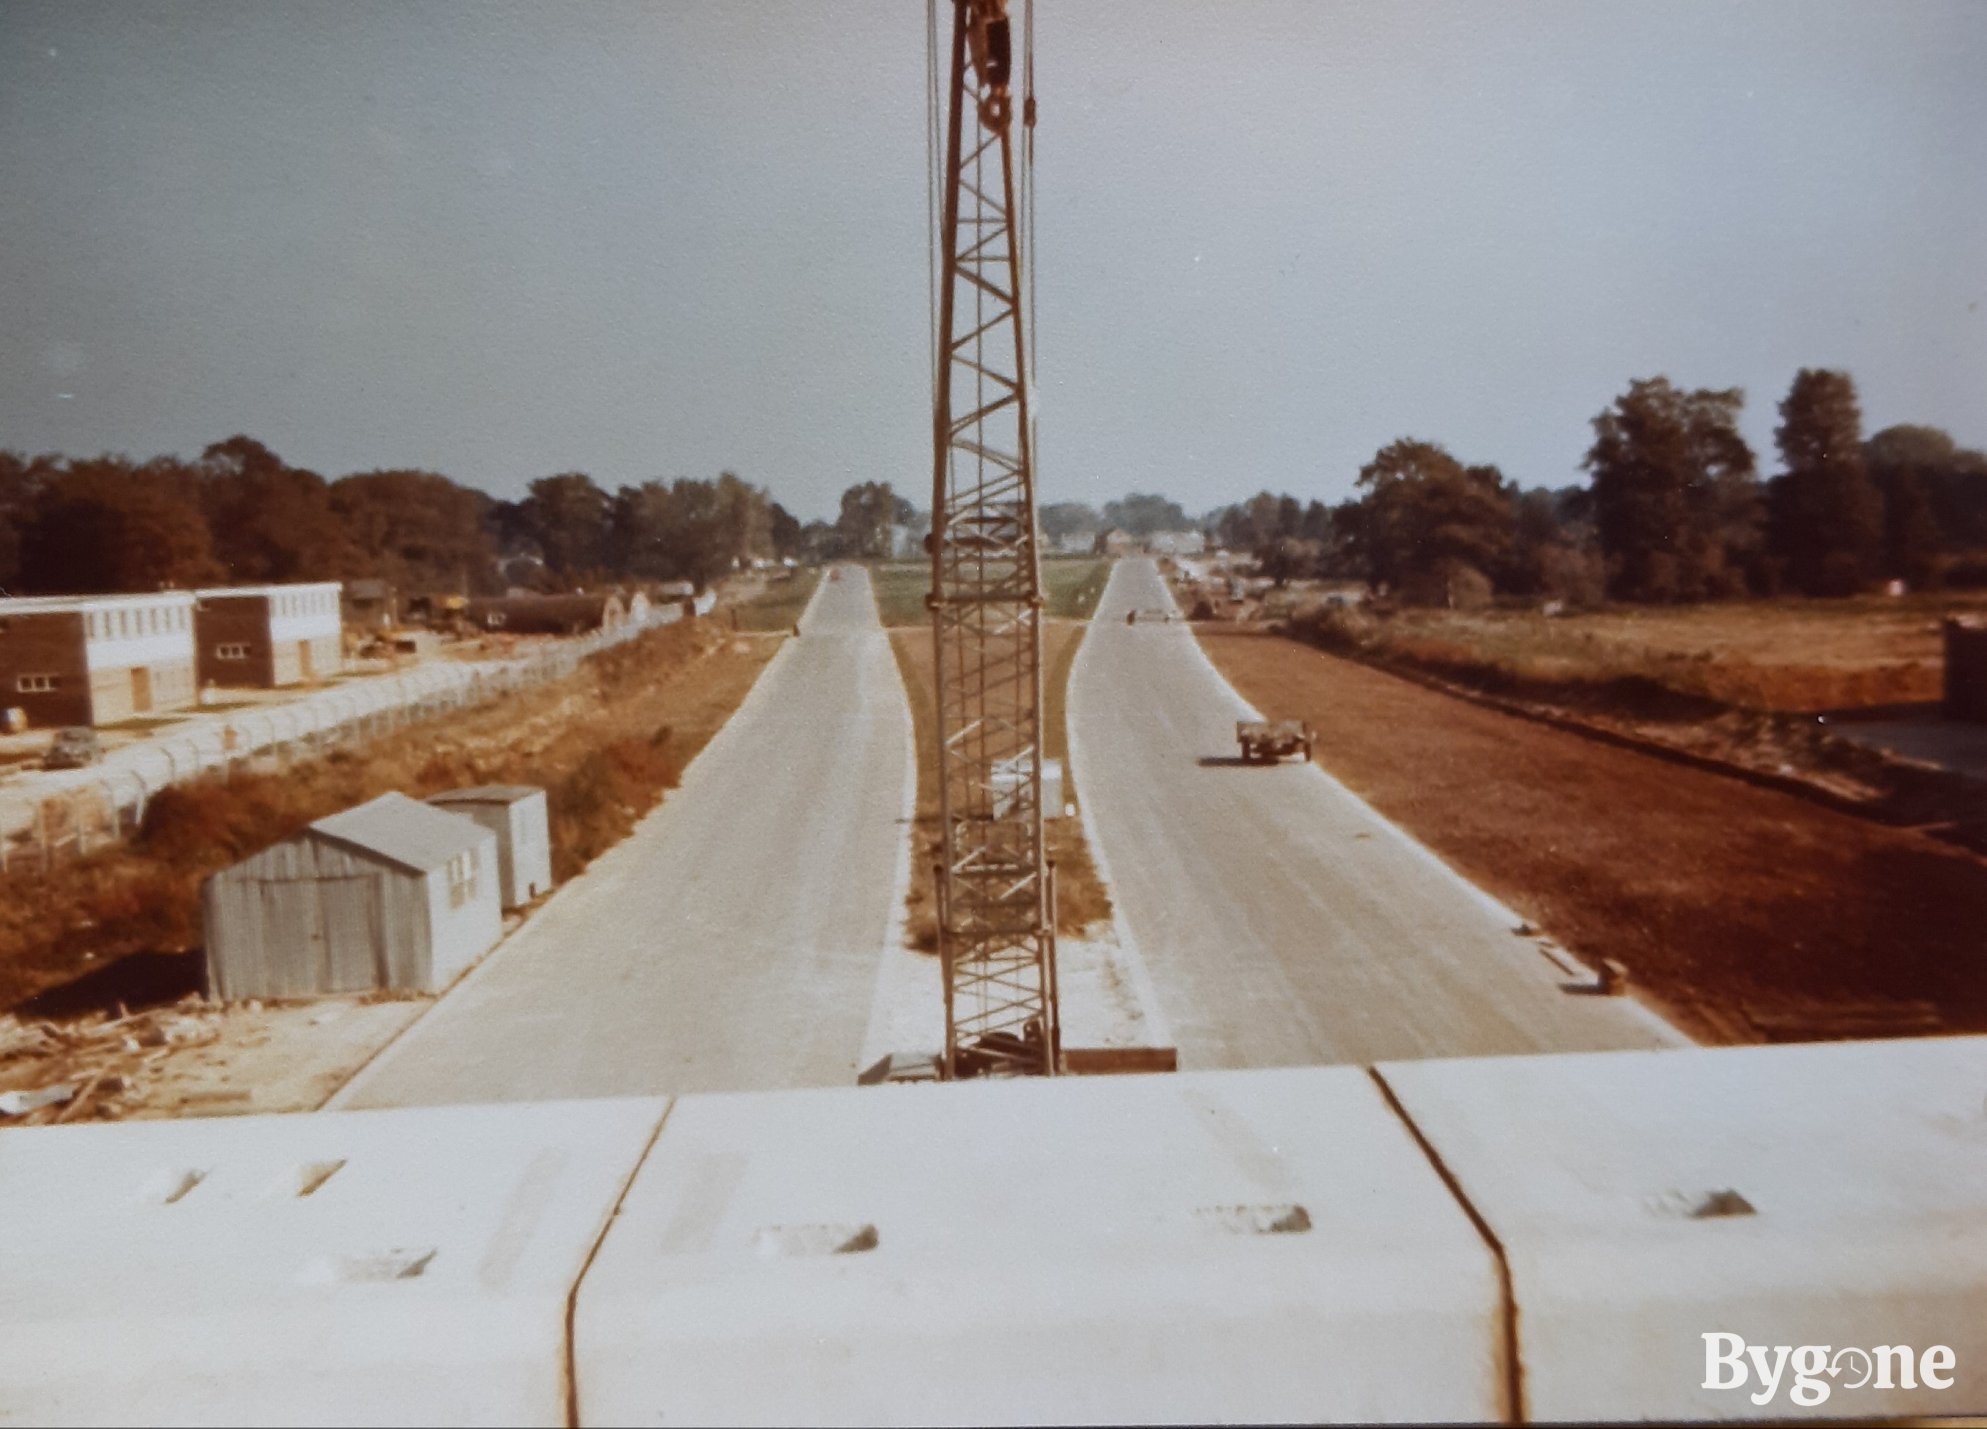 A27 under construction near Havant